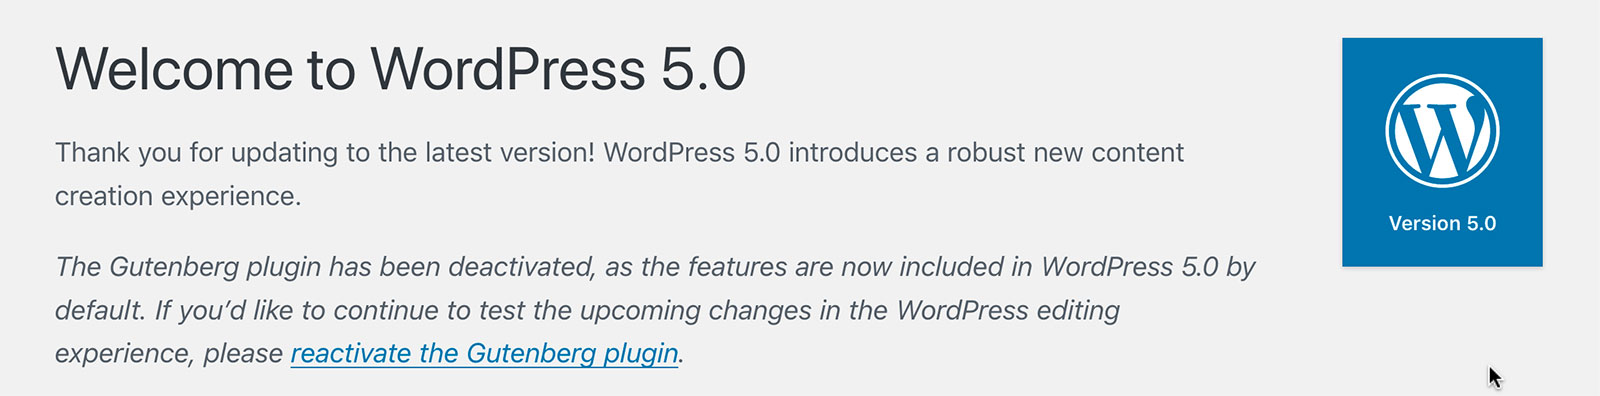 welcome-to-wordpress-5-0